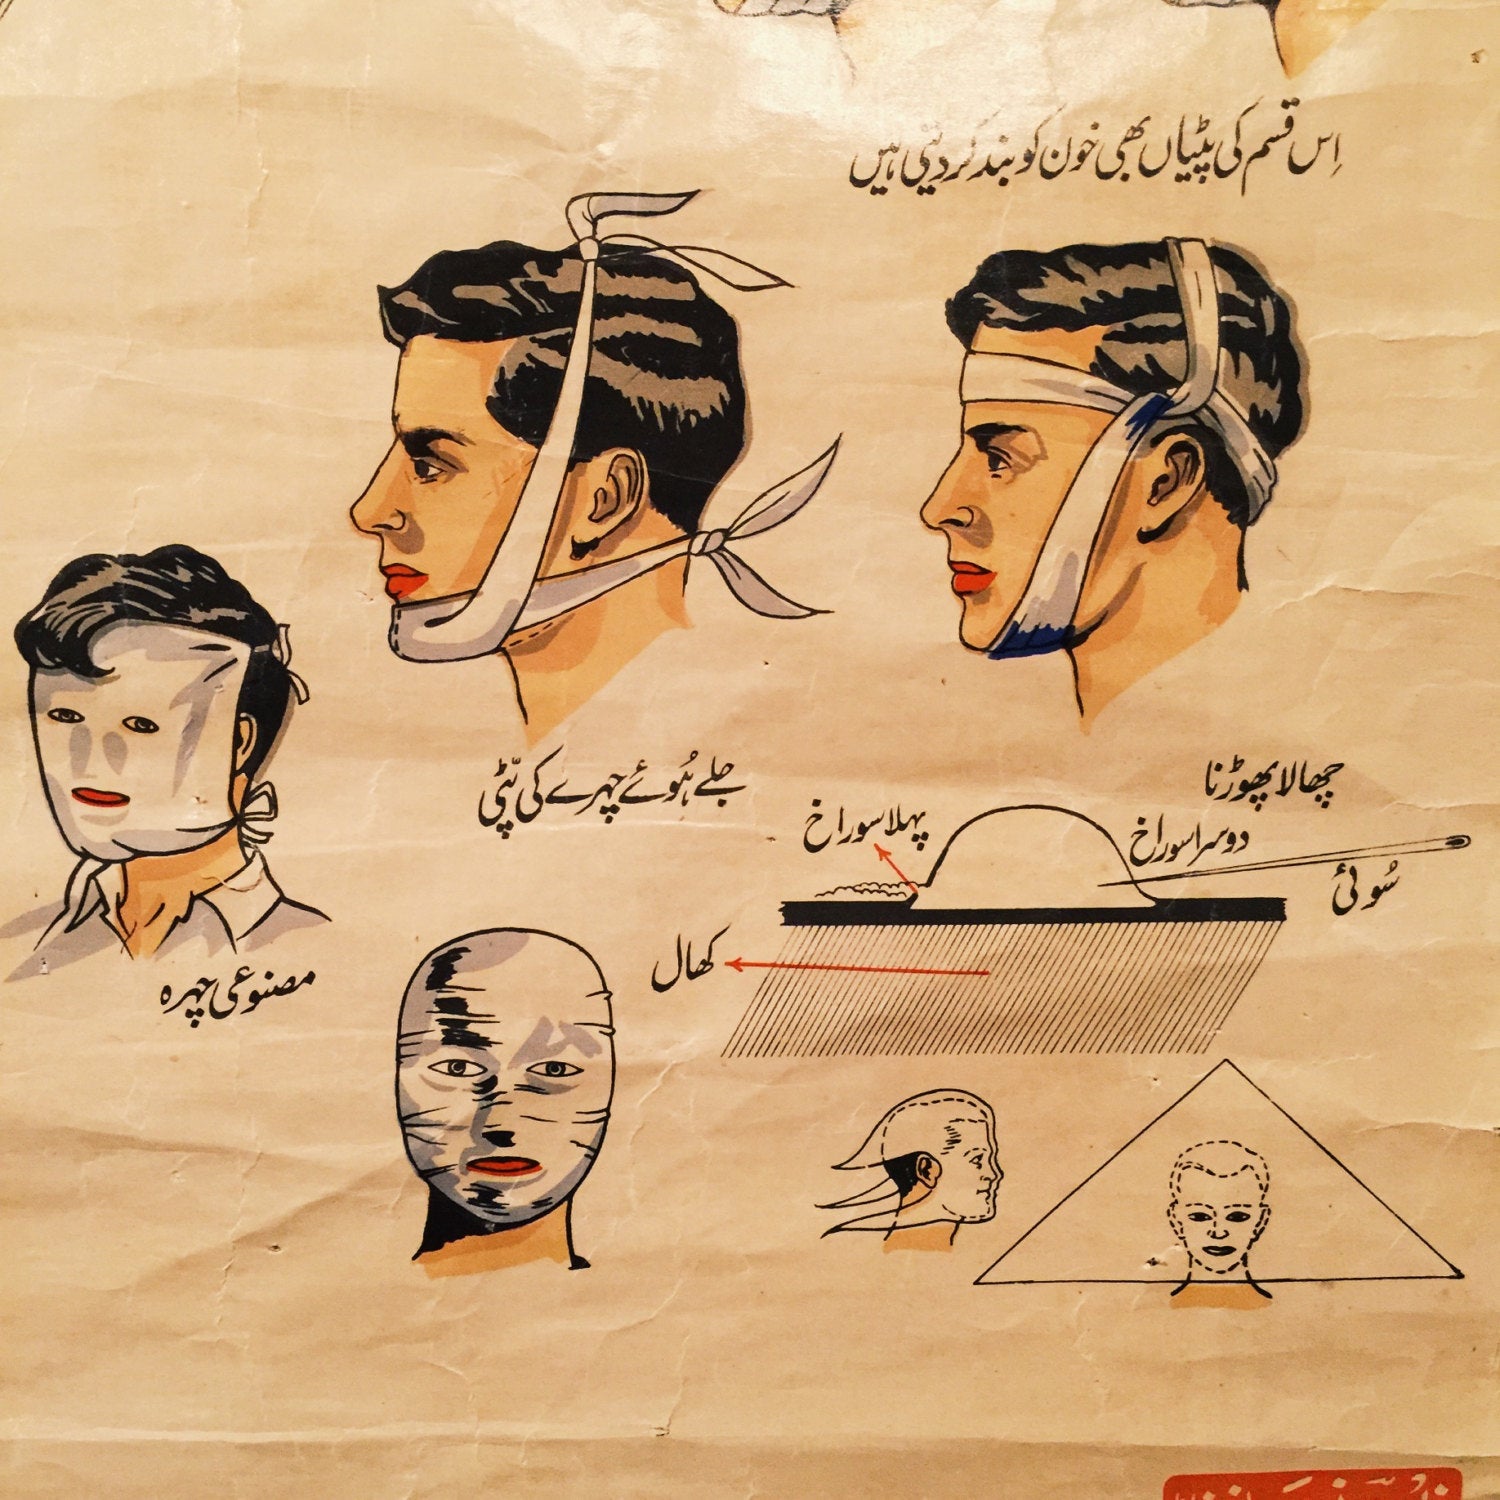 Vintage Medical First Aid Lithograph Chart in Urdu Language - Pakistan? - Linen - Bizarre - Snakebite - Death - Railroad - Creepy